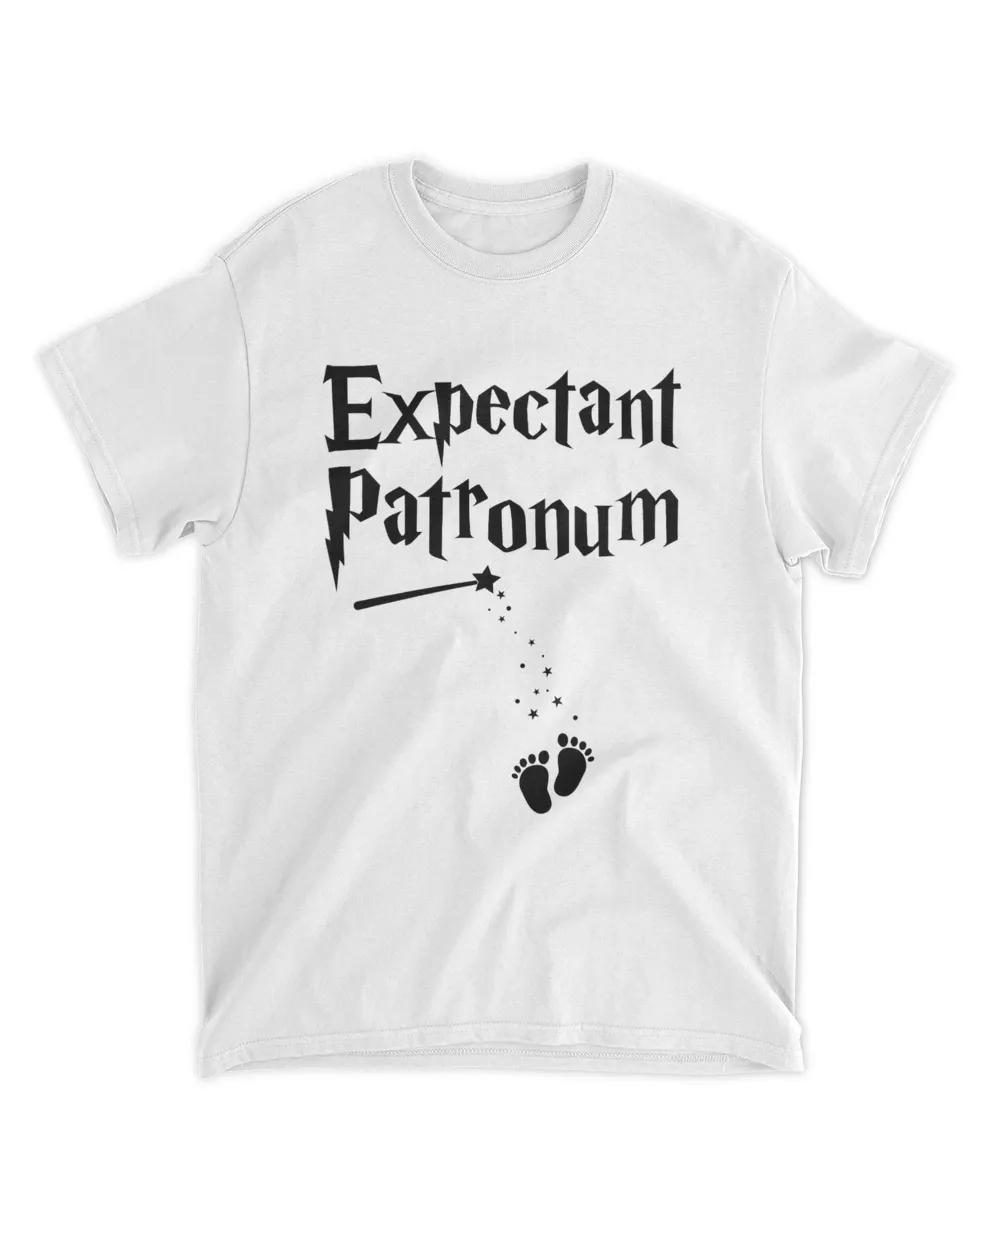 Expectant Patronum Magic -  Baby Announcement Shirt